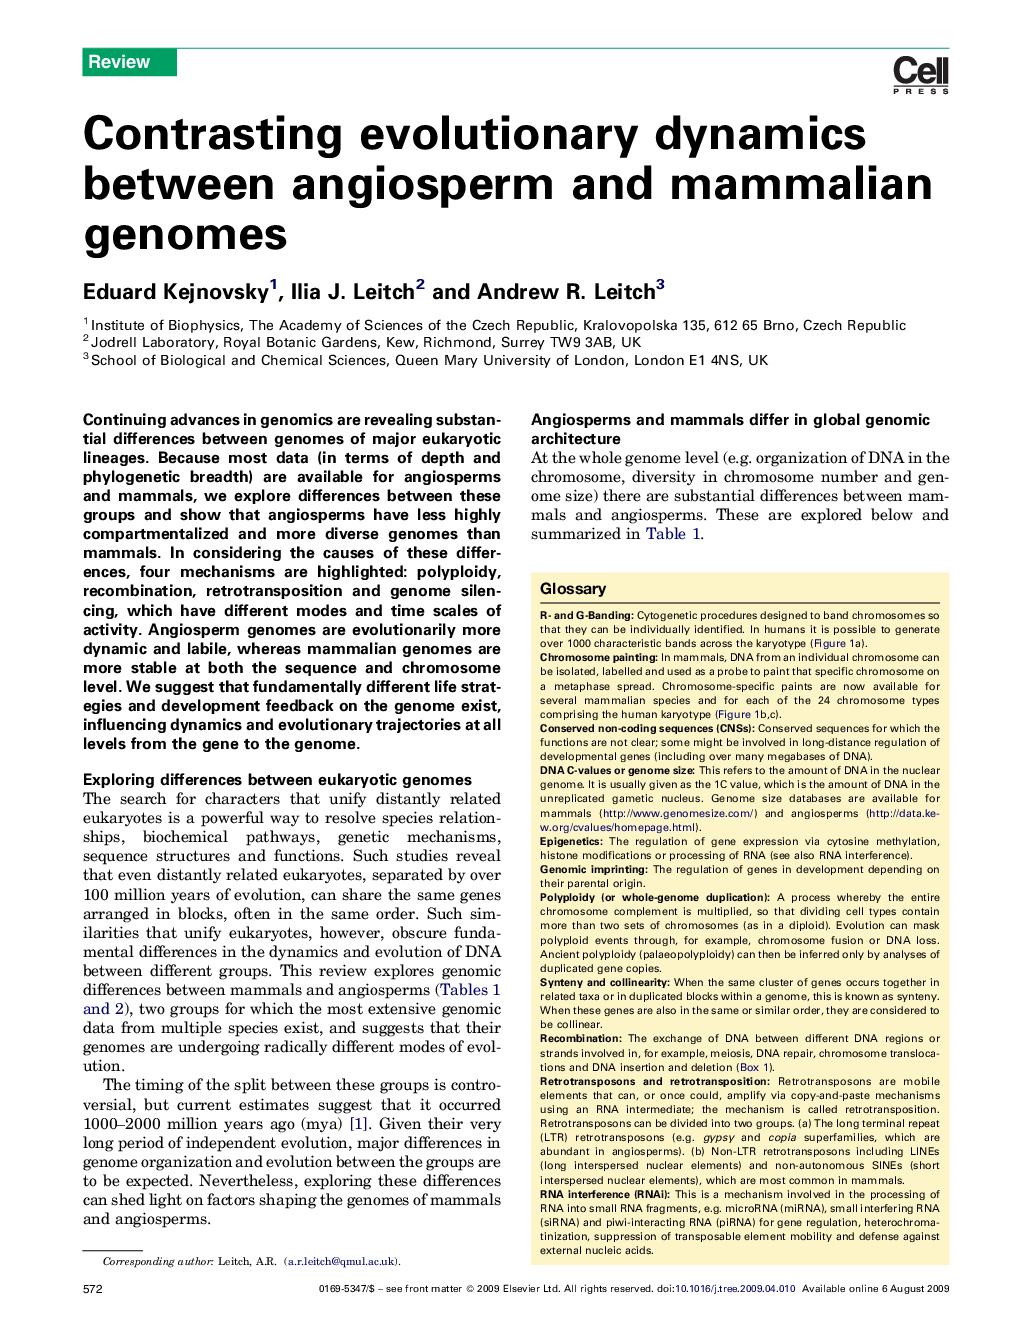 Contrasting evolutionary dynamics between angiosperm and mammalian genomes